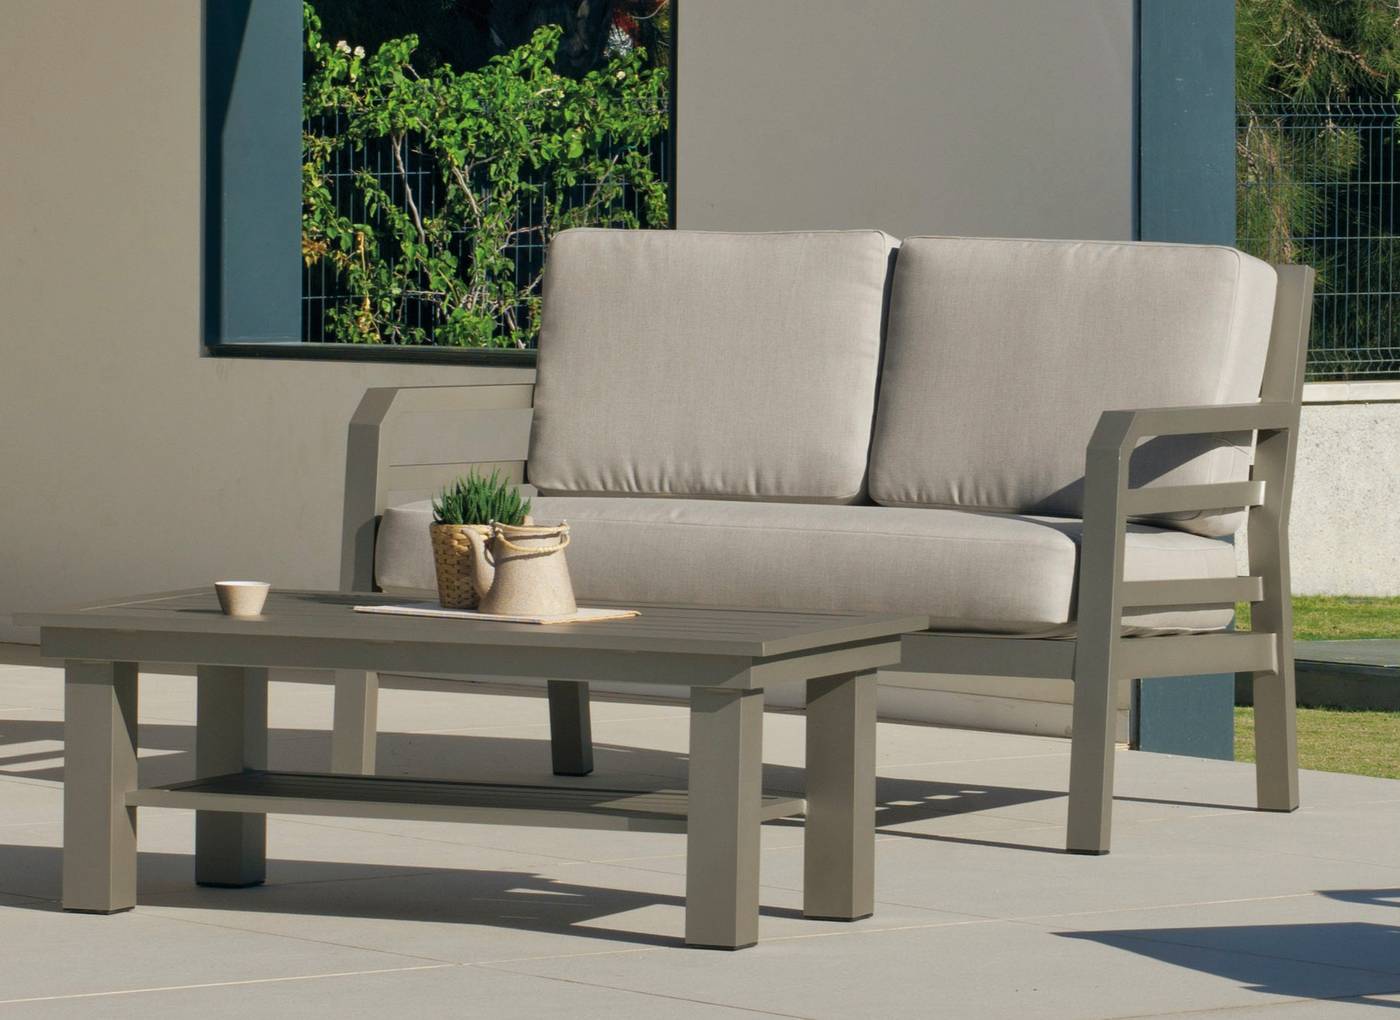 Set Aluminio Luxe Camelia-9 - Conjunto lujo de aluminio: 1 sofá de 2 plazas + 2 sillones + 2 reposapiés + 1 mesa de centro + cojines.